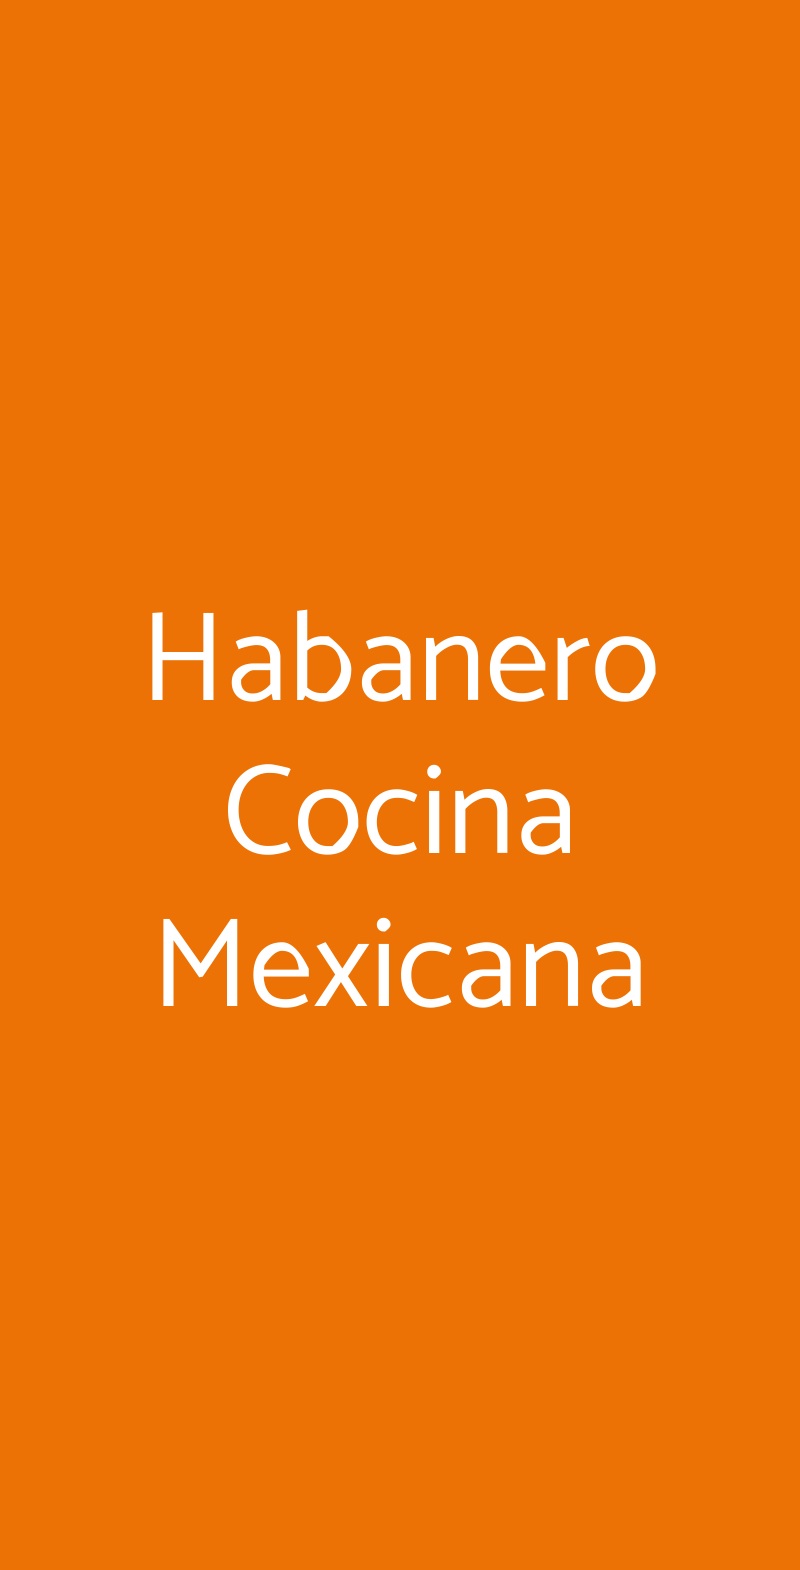 Habanero Cocina Mexicana Torino menù 1 pagina